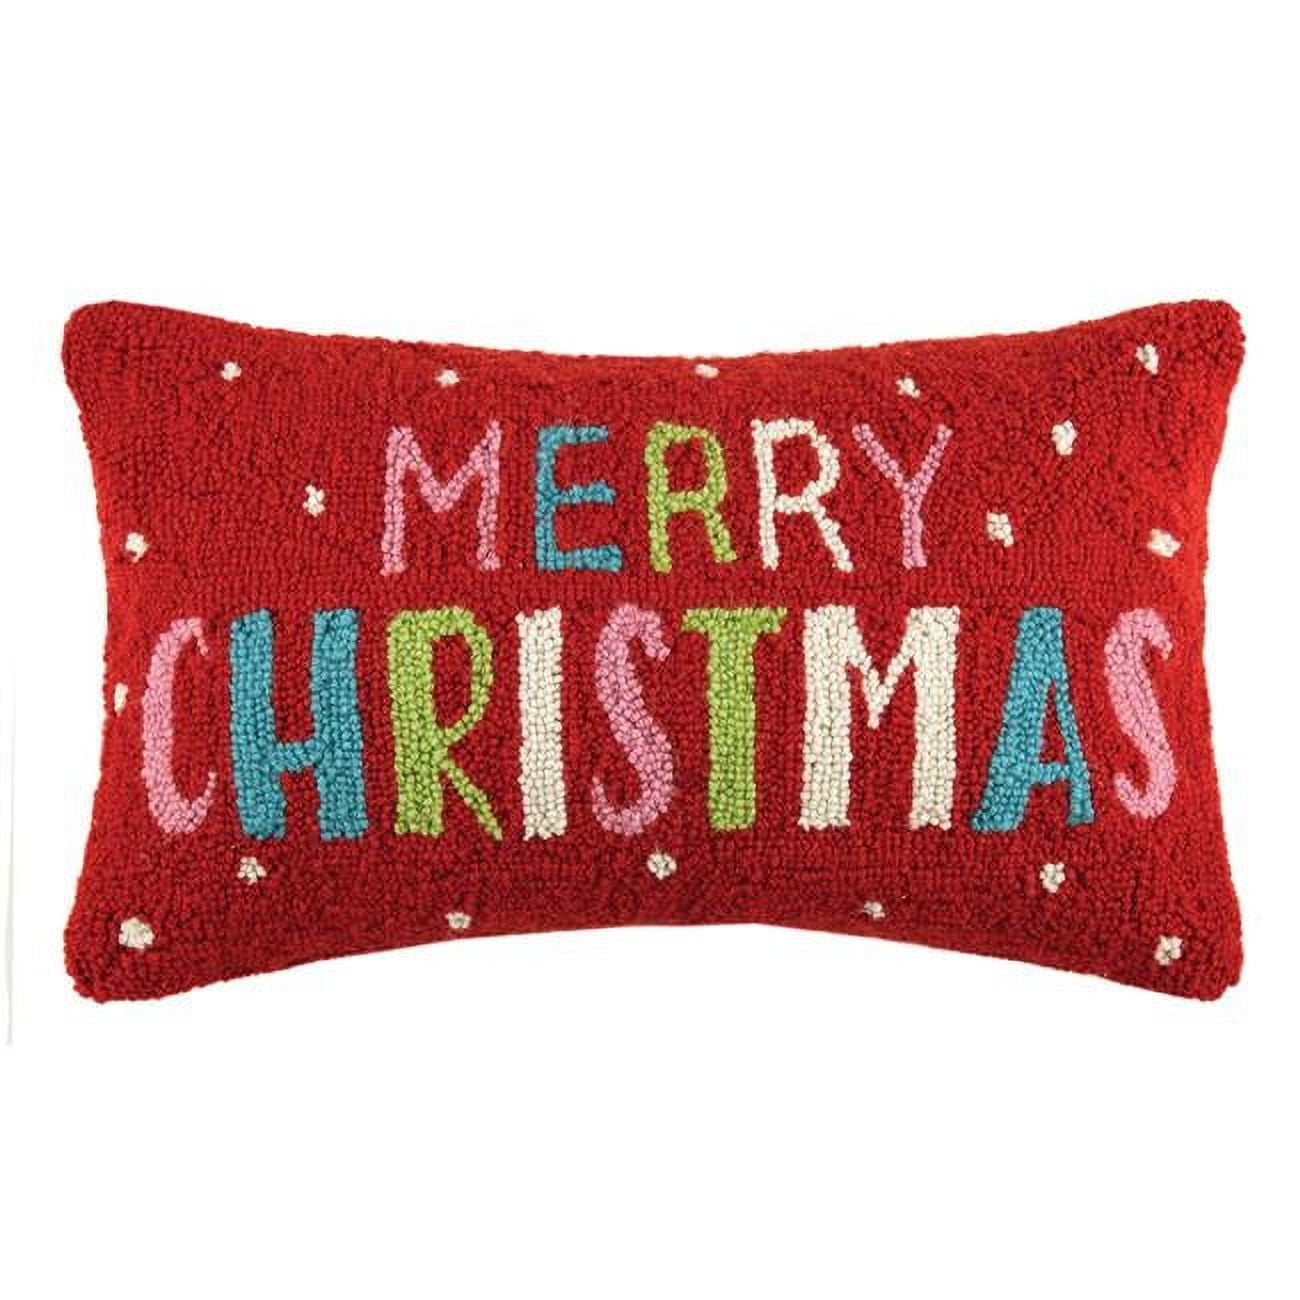 Multi Merry Christmas Pillow by Peking Handicraft